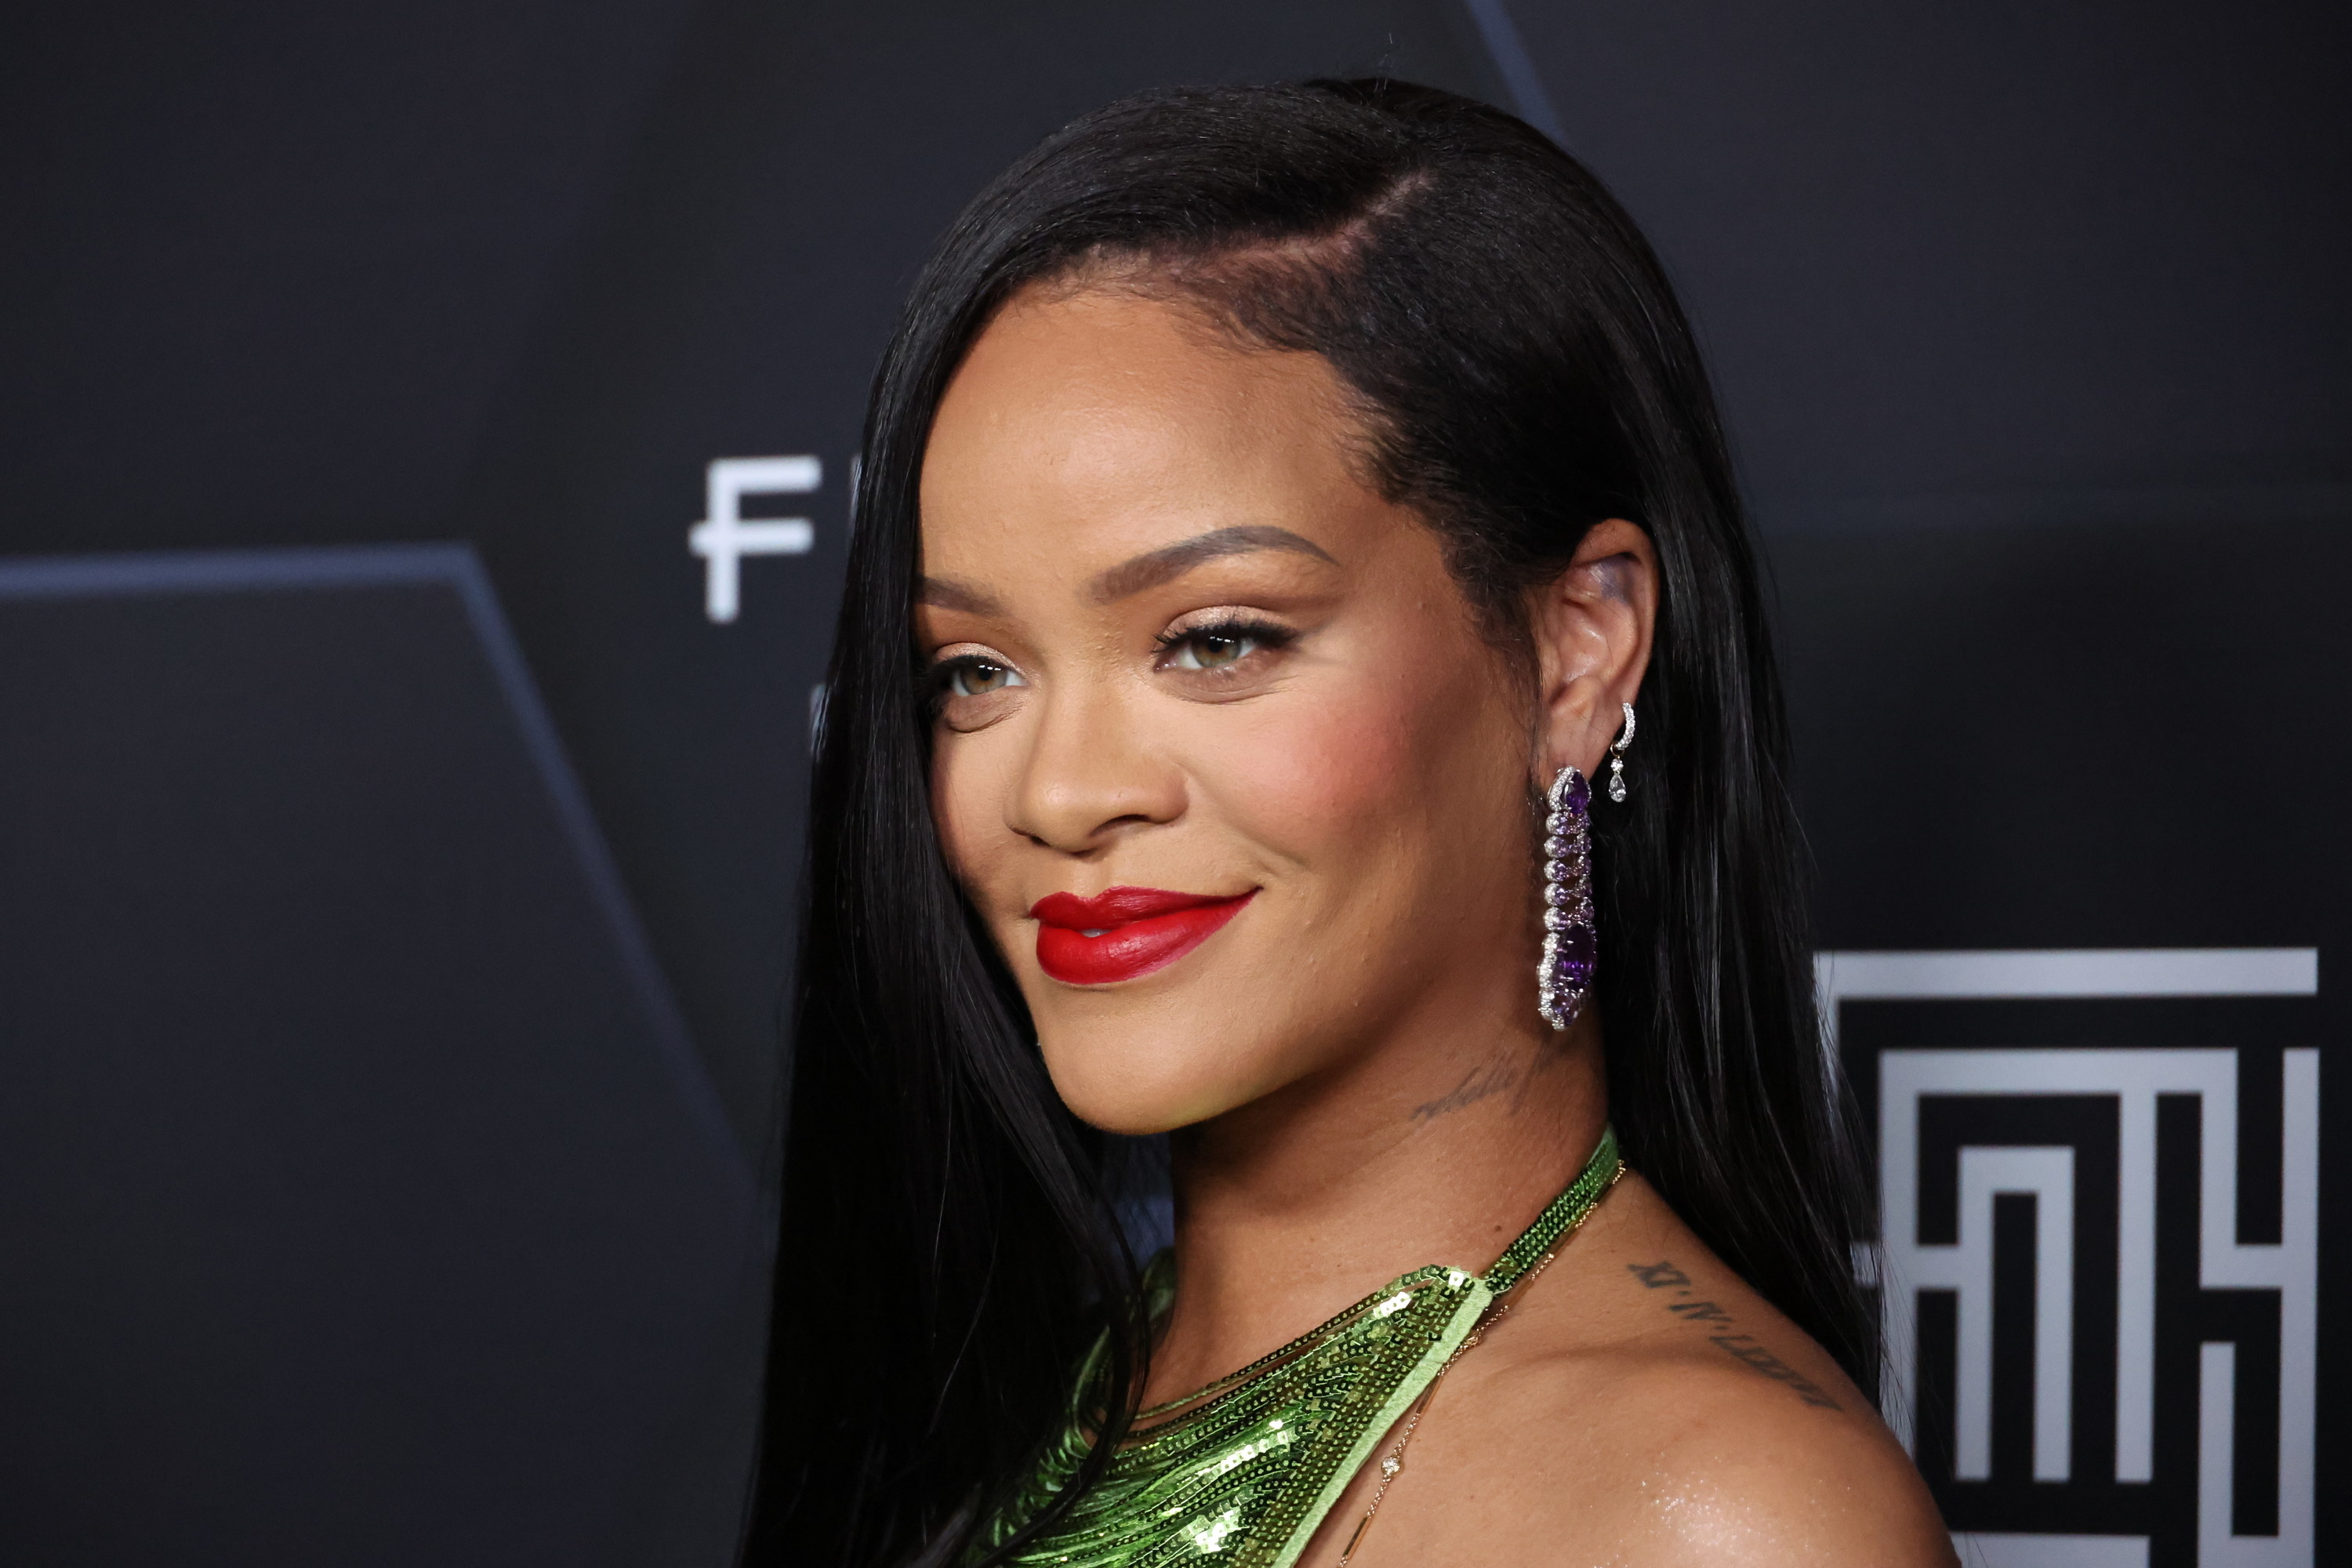 Rihanna smiling at an event